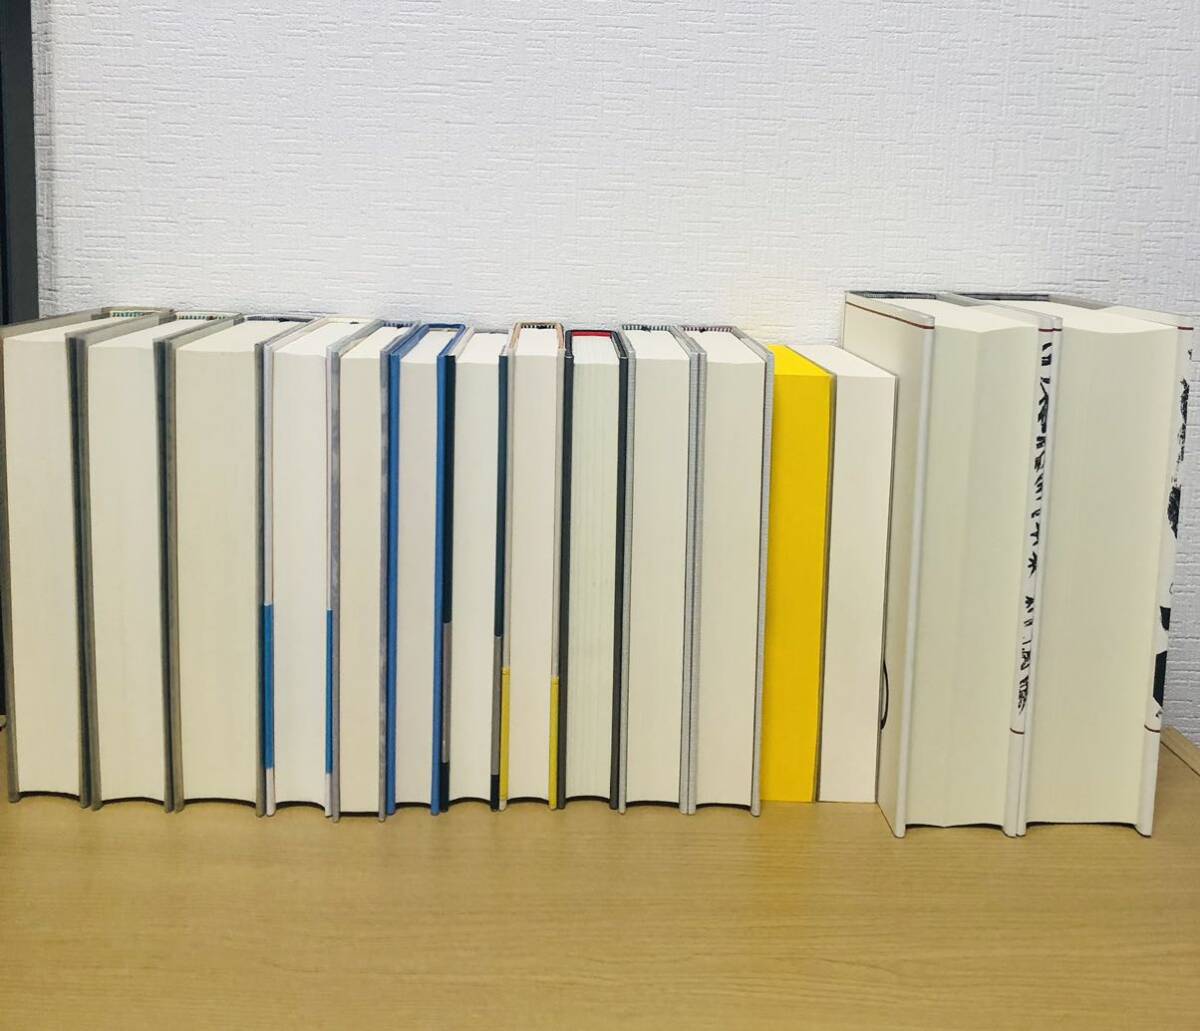  Oooka Shohei complete set of works Murakami Haruki work compilation 15 pcs. 